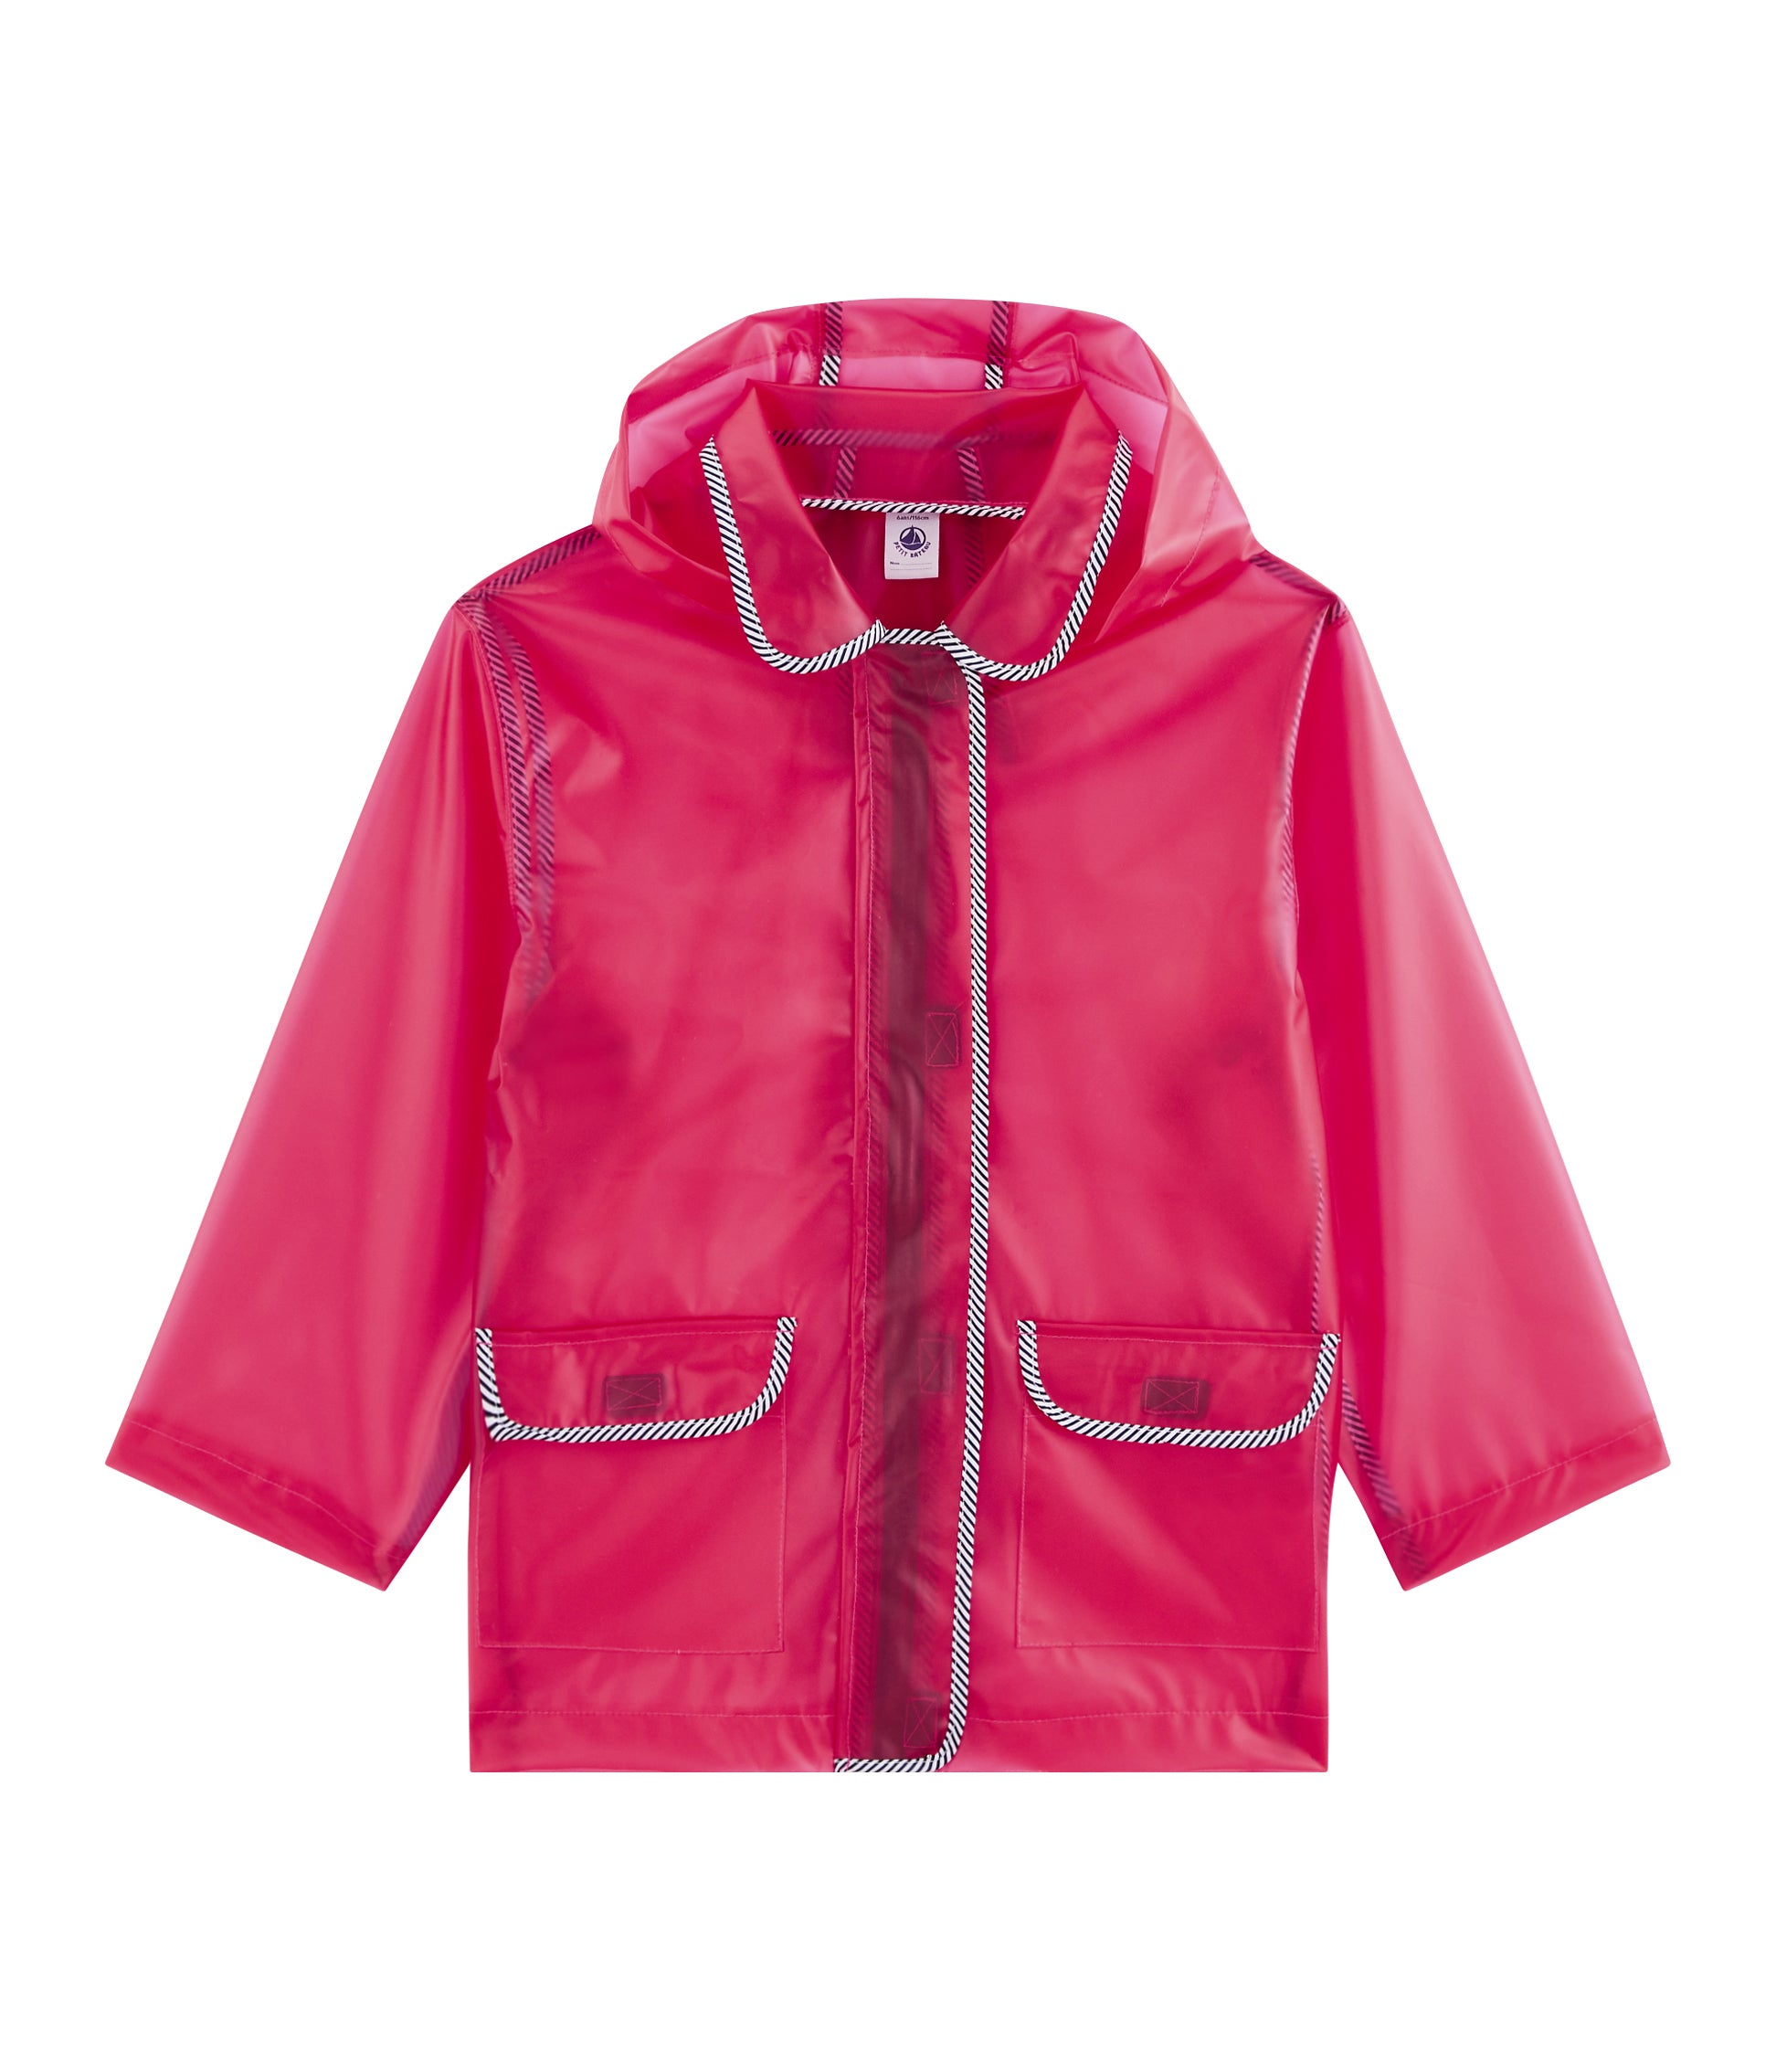 Girls Bright Pink Hooded Raincoat